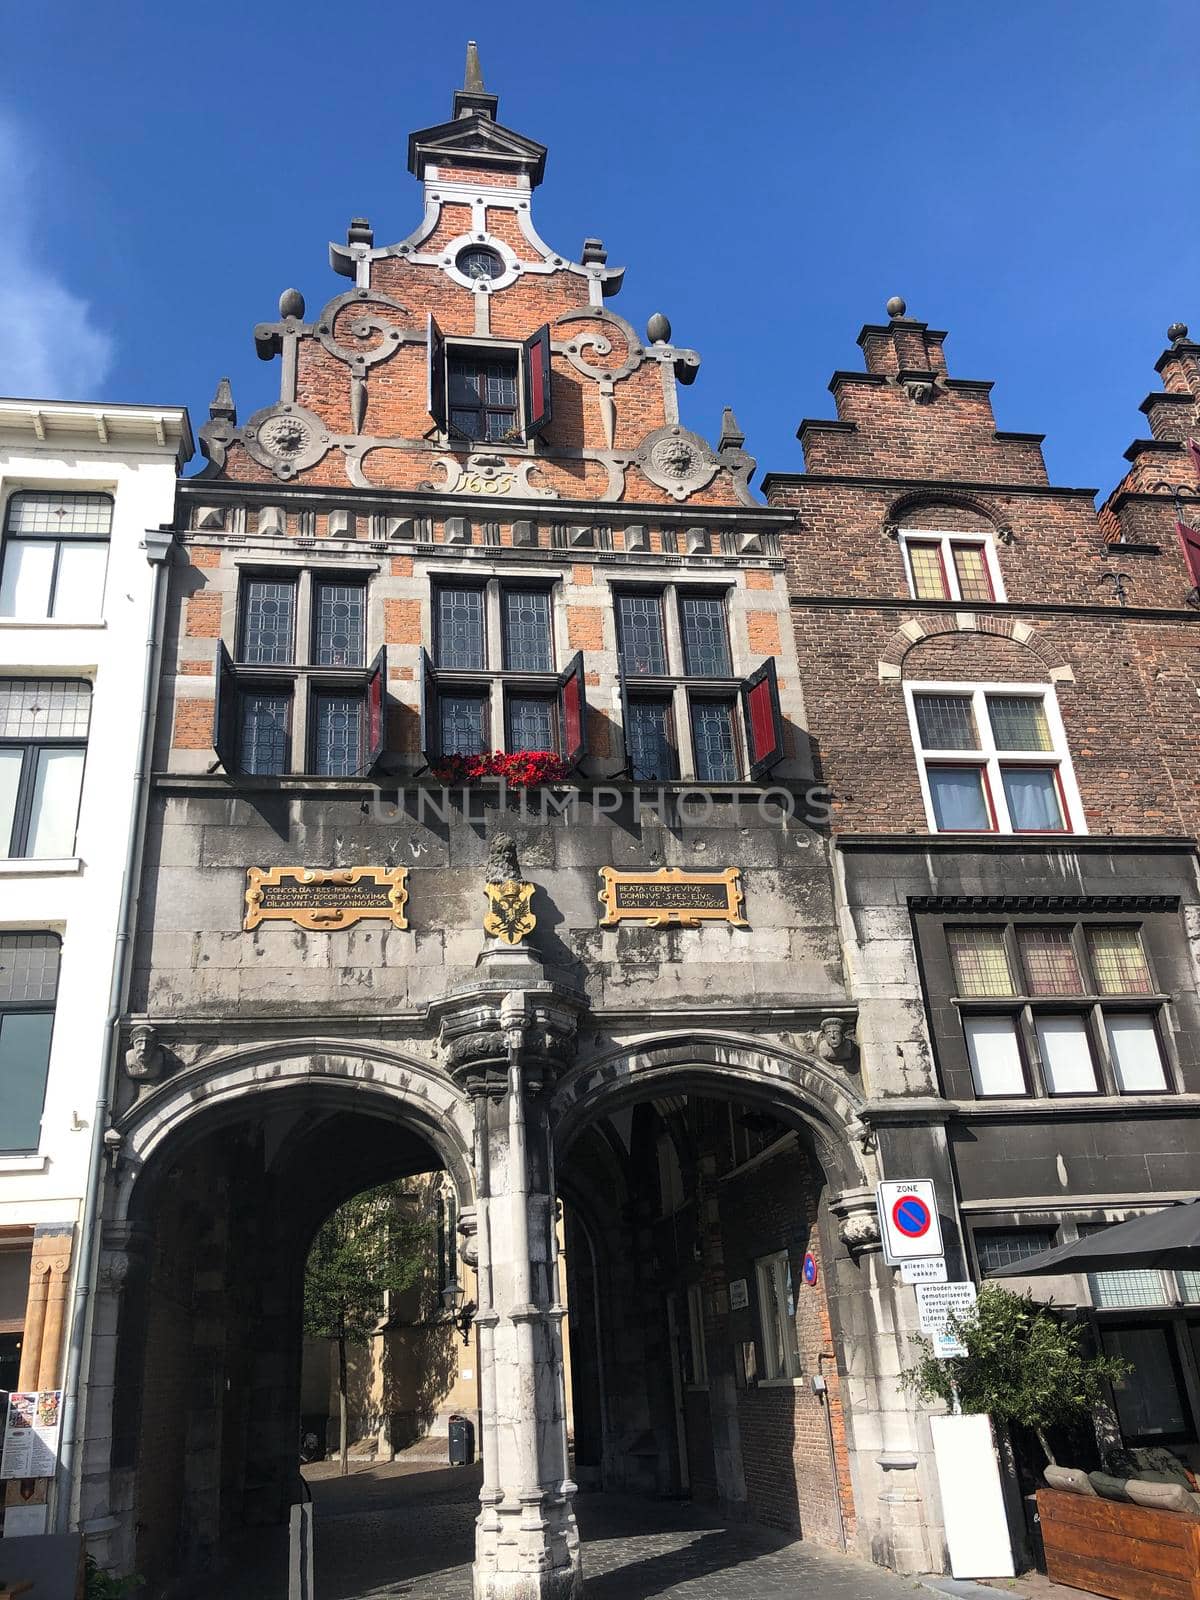 Architecture in the old town of Nijmegen, Gelderland The Netherlands